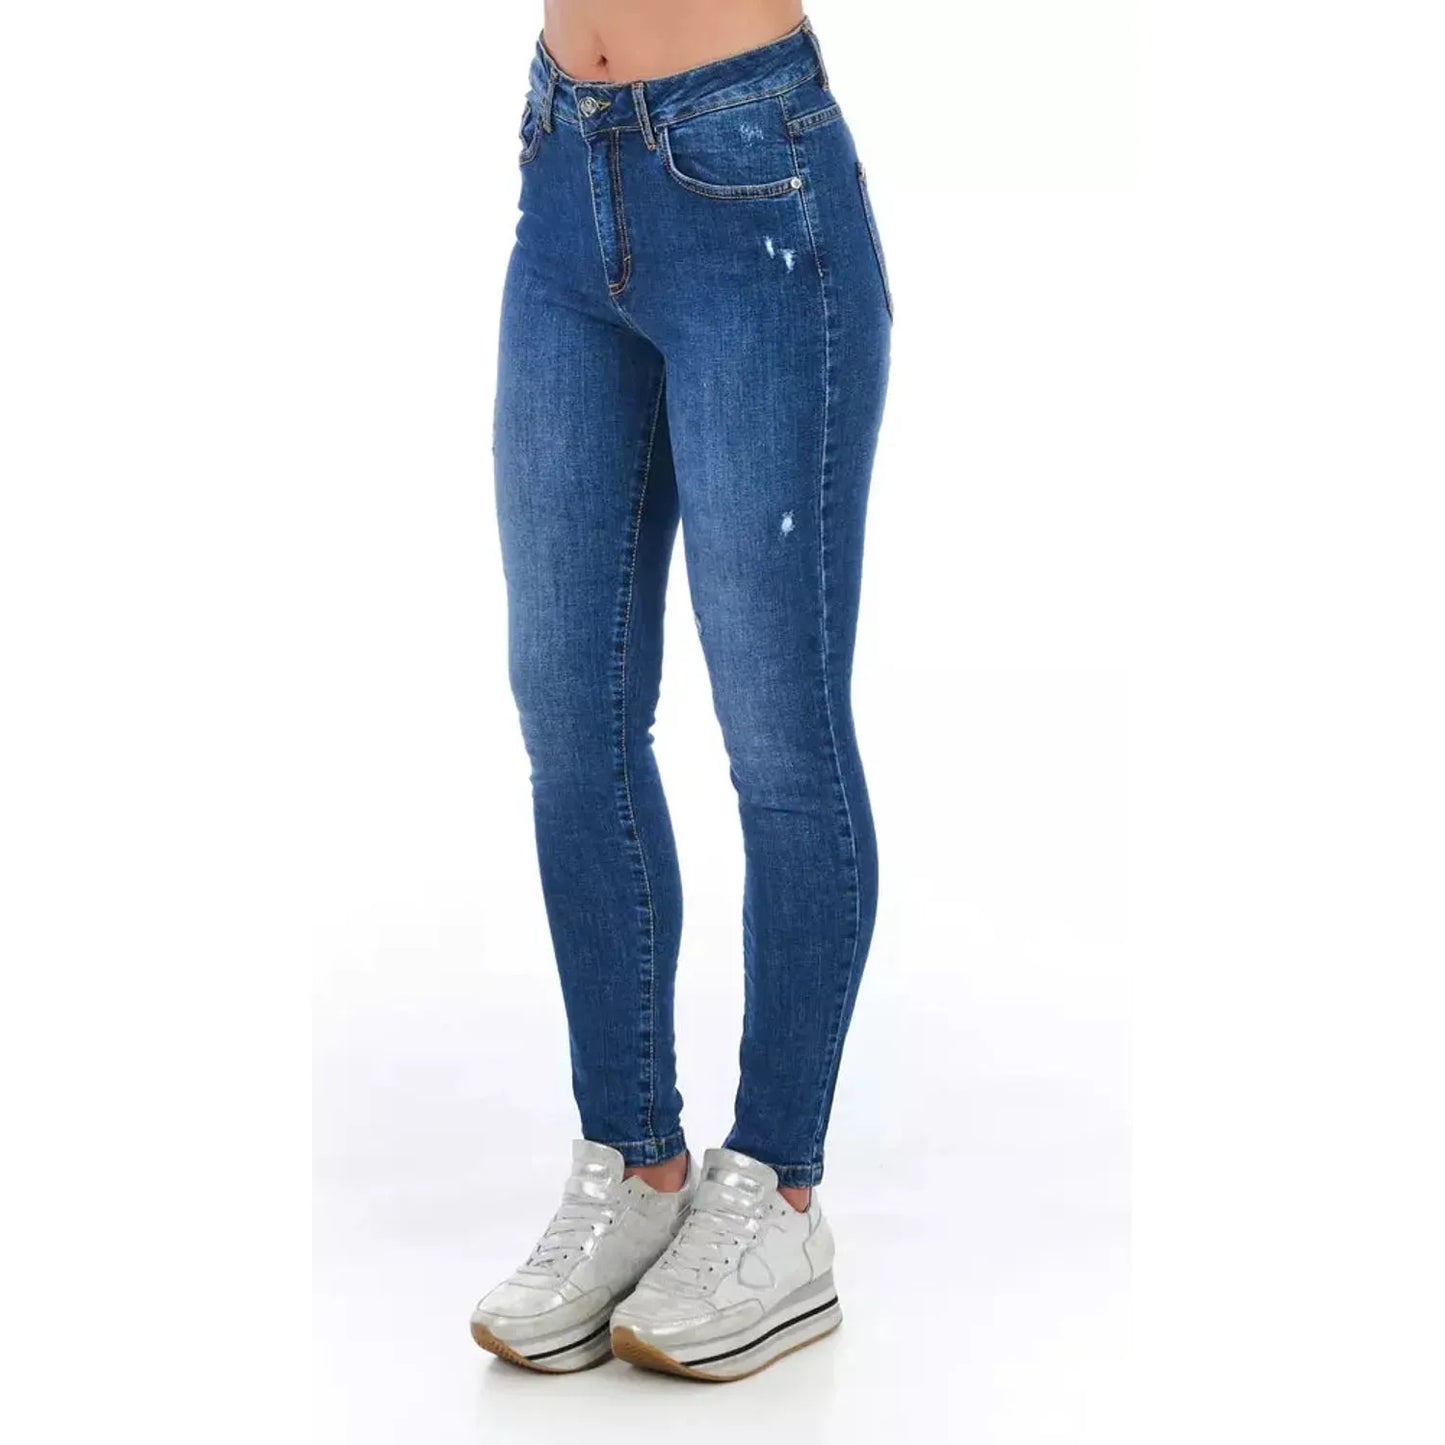 Frankie Morello Stylish Worn Wash Denim Jeans blue-jeans-pant-6 stock_product_image_21770_833899927-30-c581d962-58e.webp